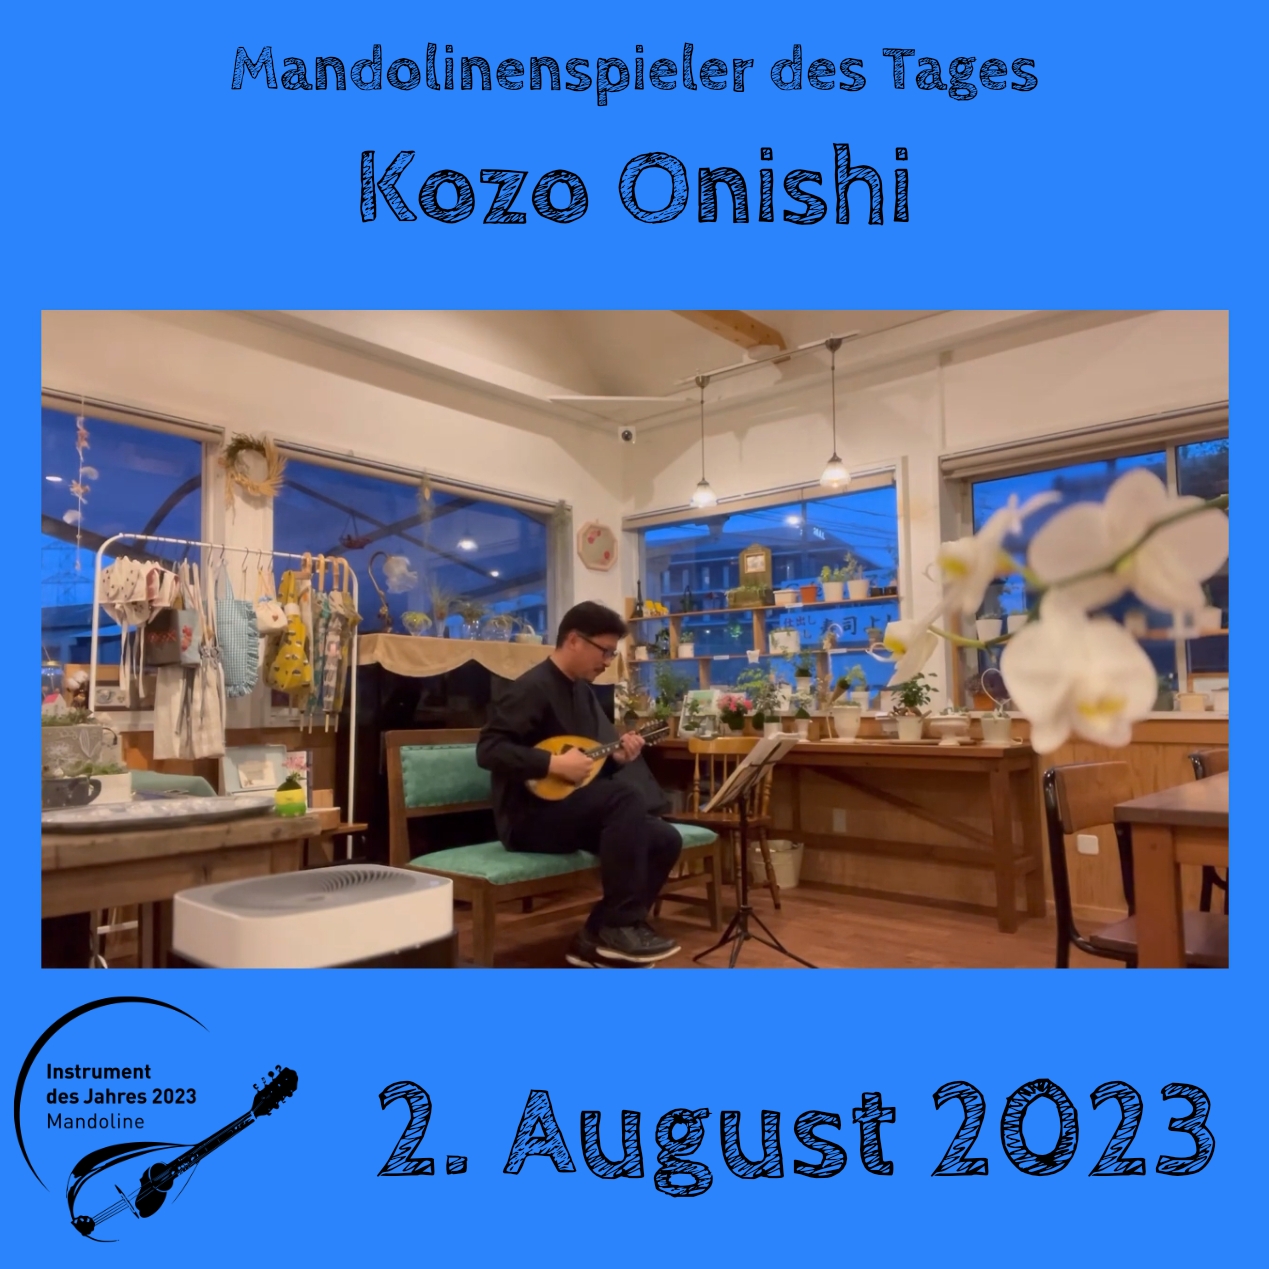 2. August  - Kozo Onishi Mandoline Instrument des Jahres 2023 Mandolinenspieler Mandolinenspielerin des Tages